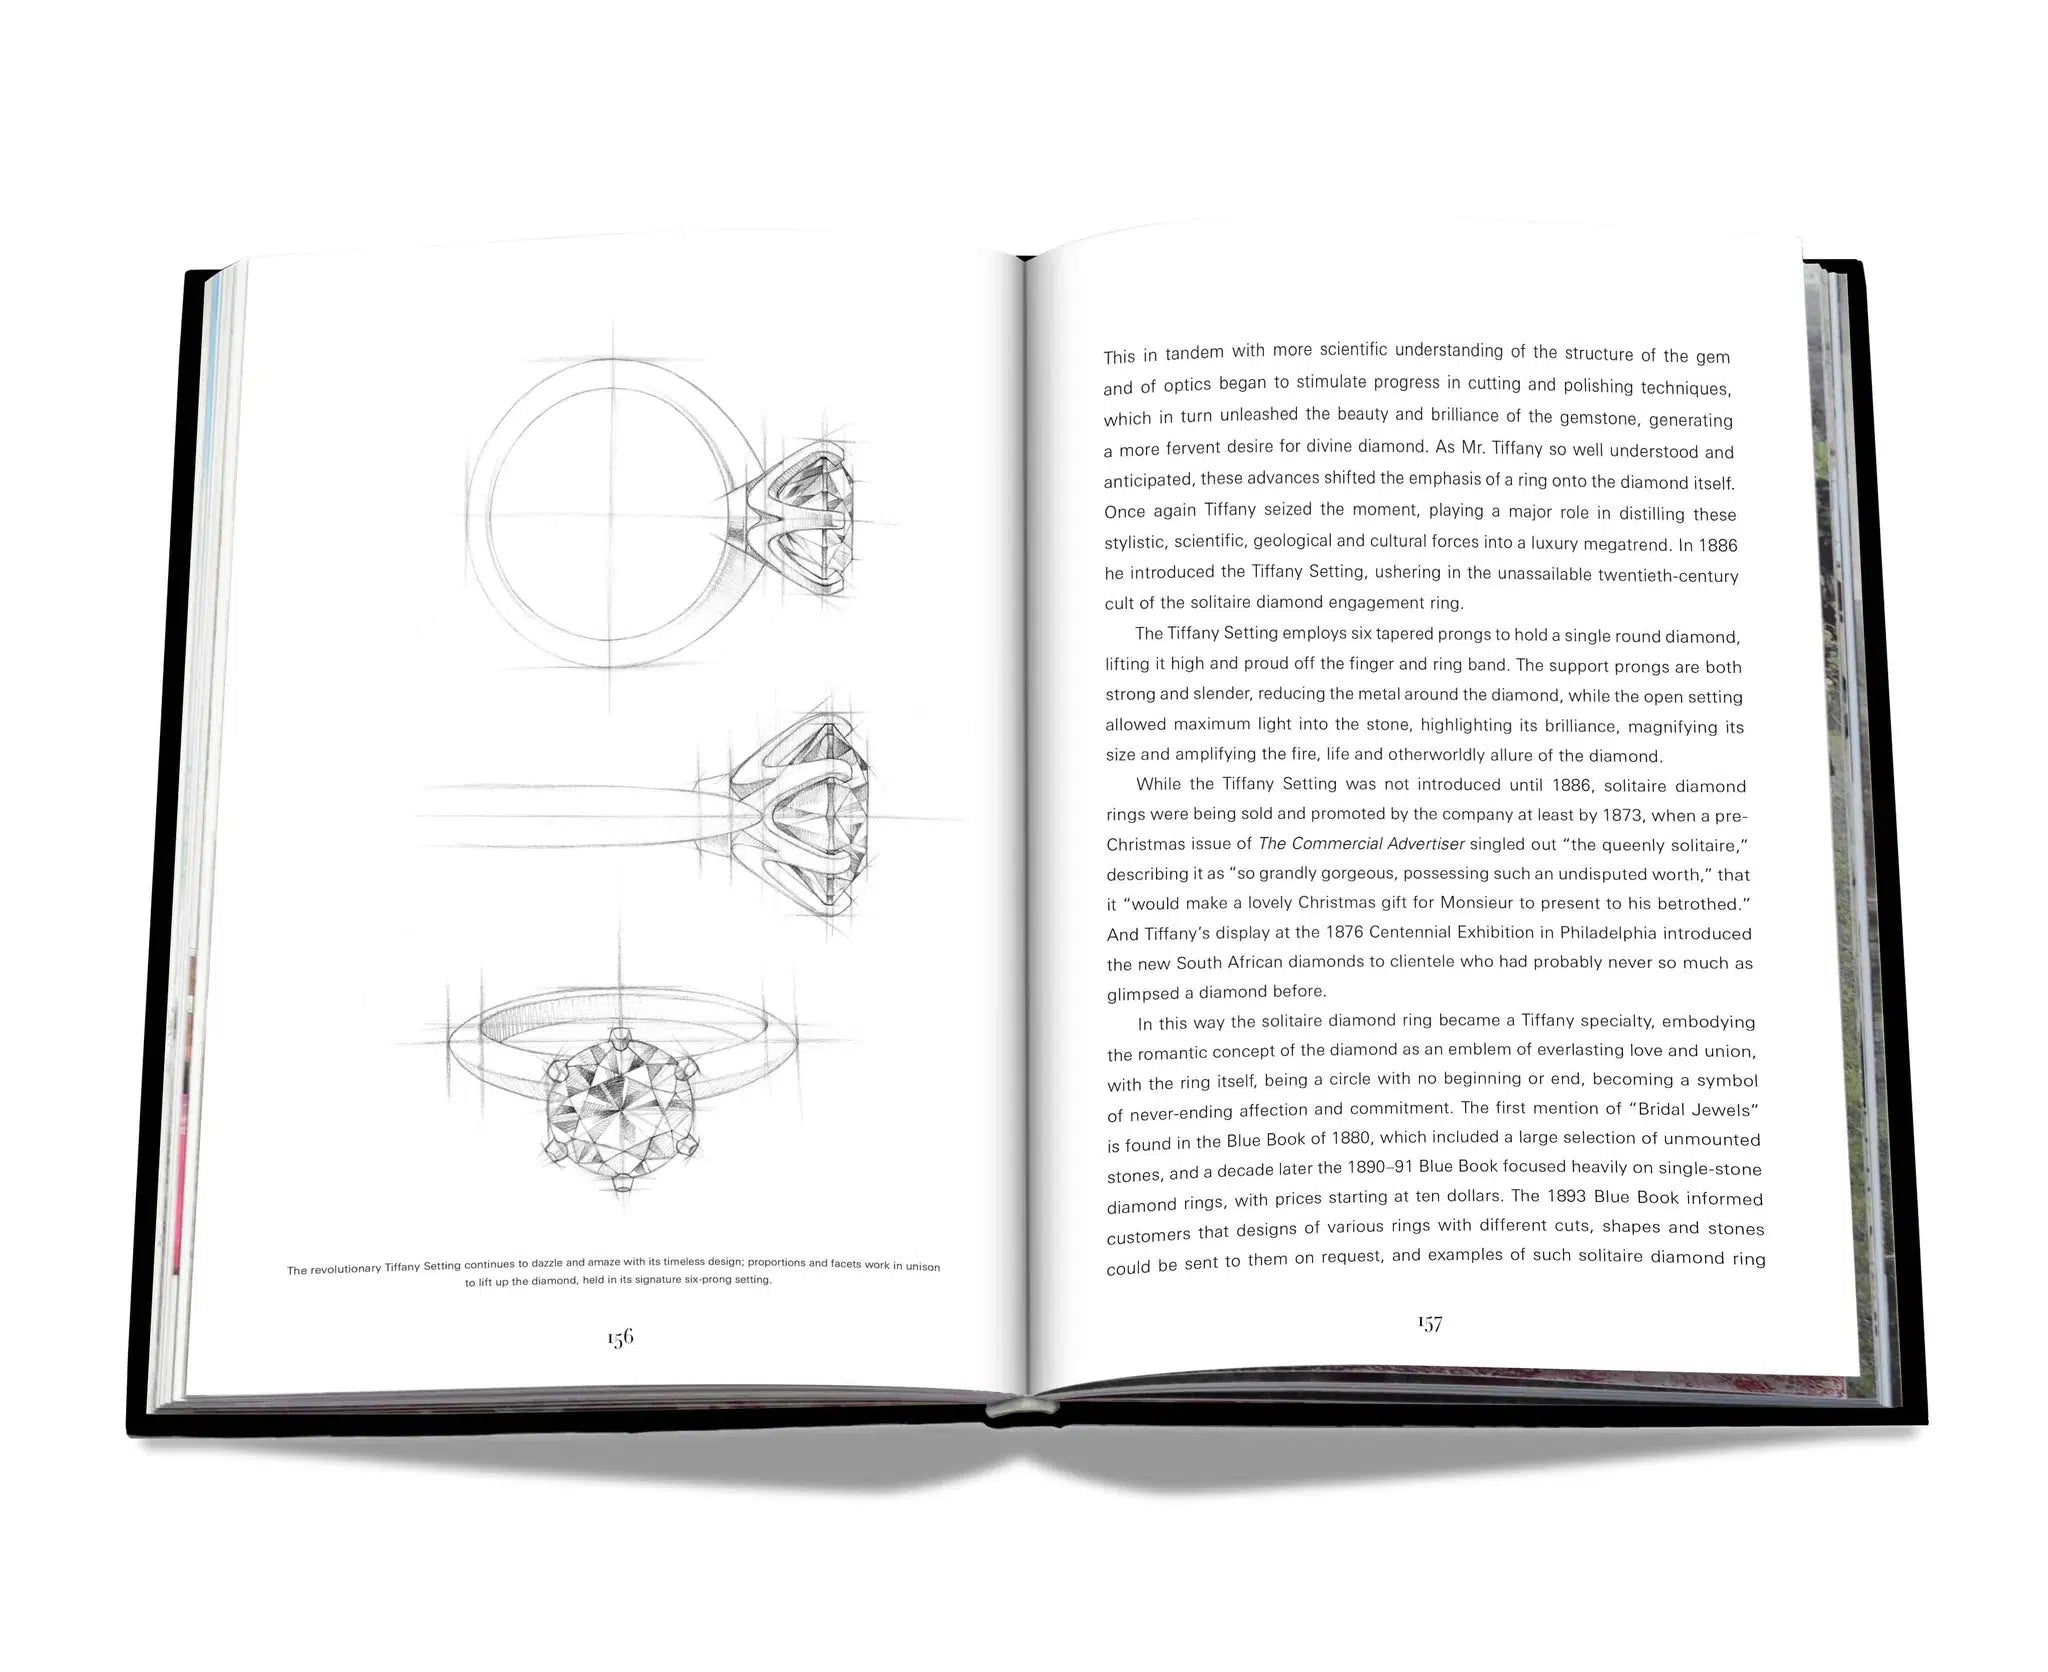 Assouline - Tiffany & Co. Vision and Virtuosity (Icon Edition)-Assouline-TOJU Interior